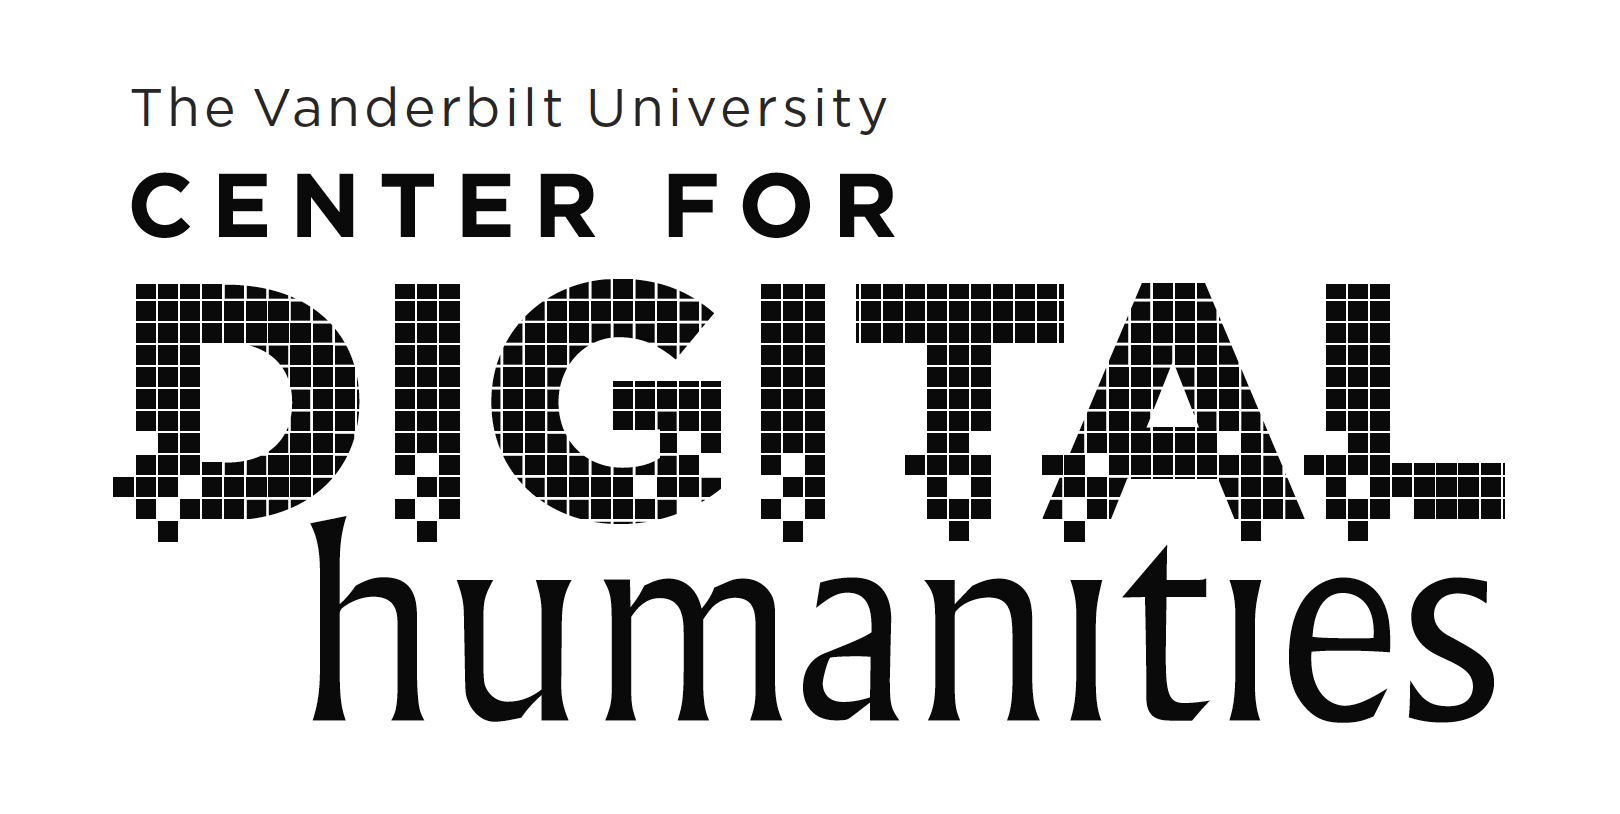 The Center for Digital Humanities at Vanderbilt University